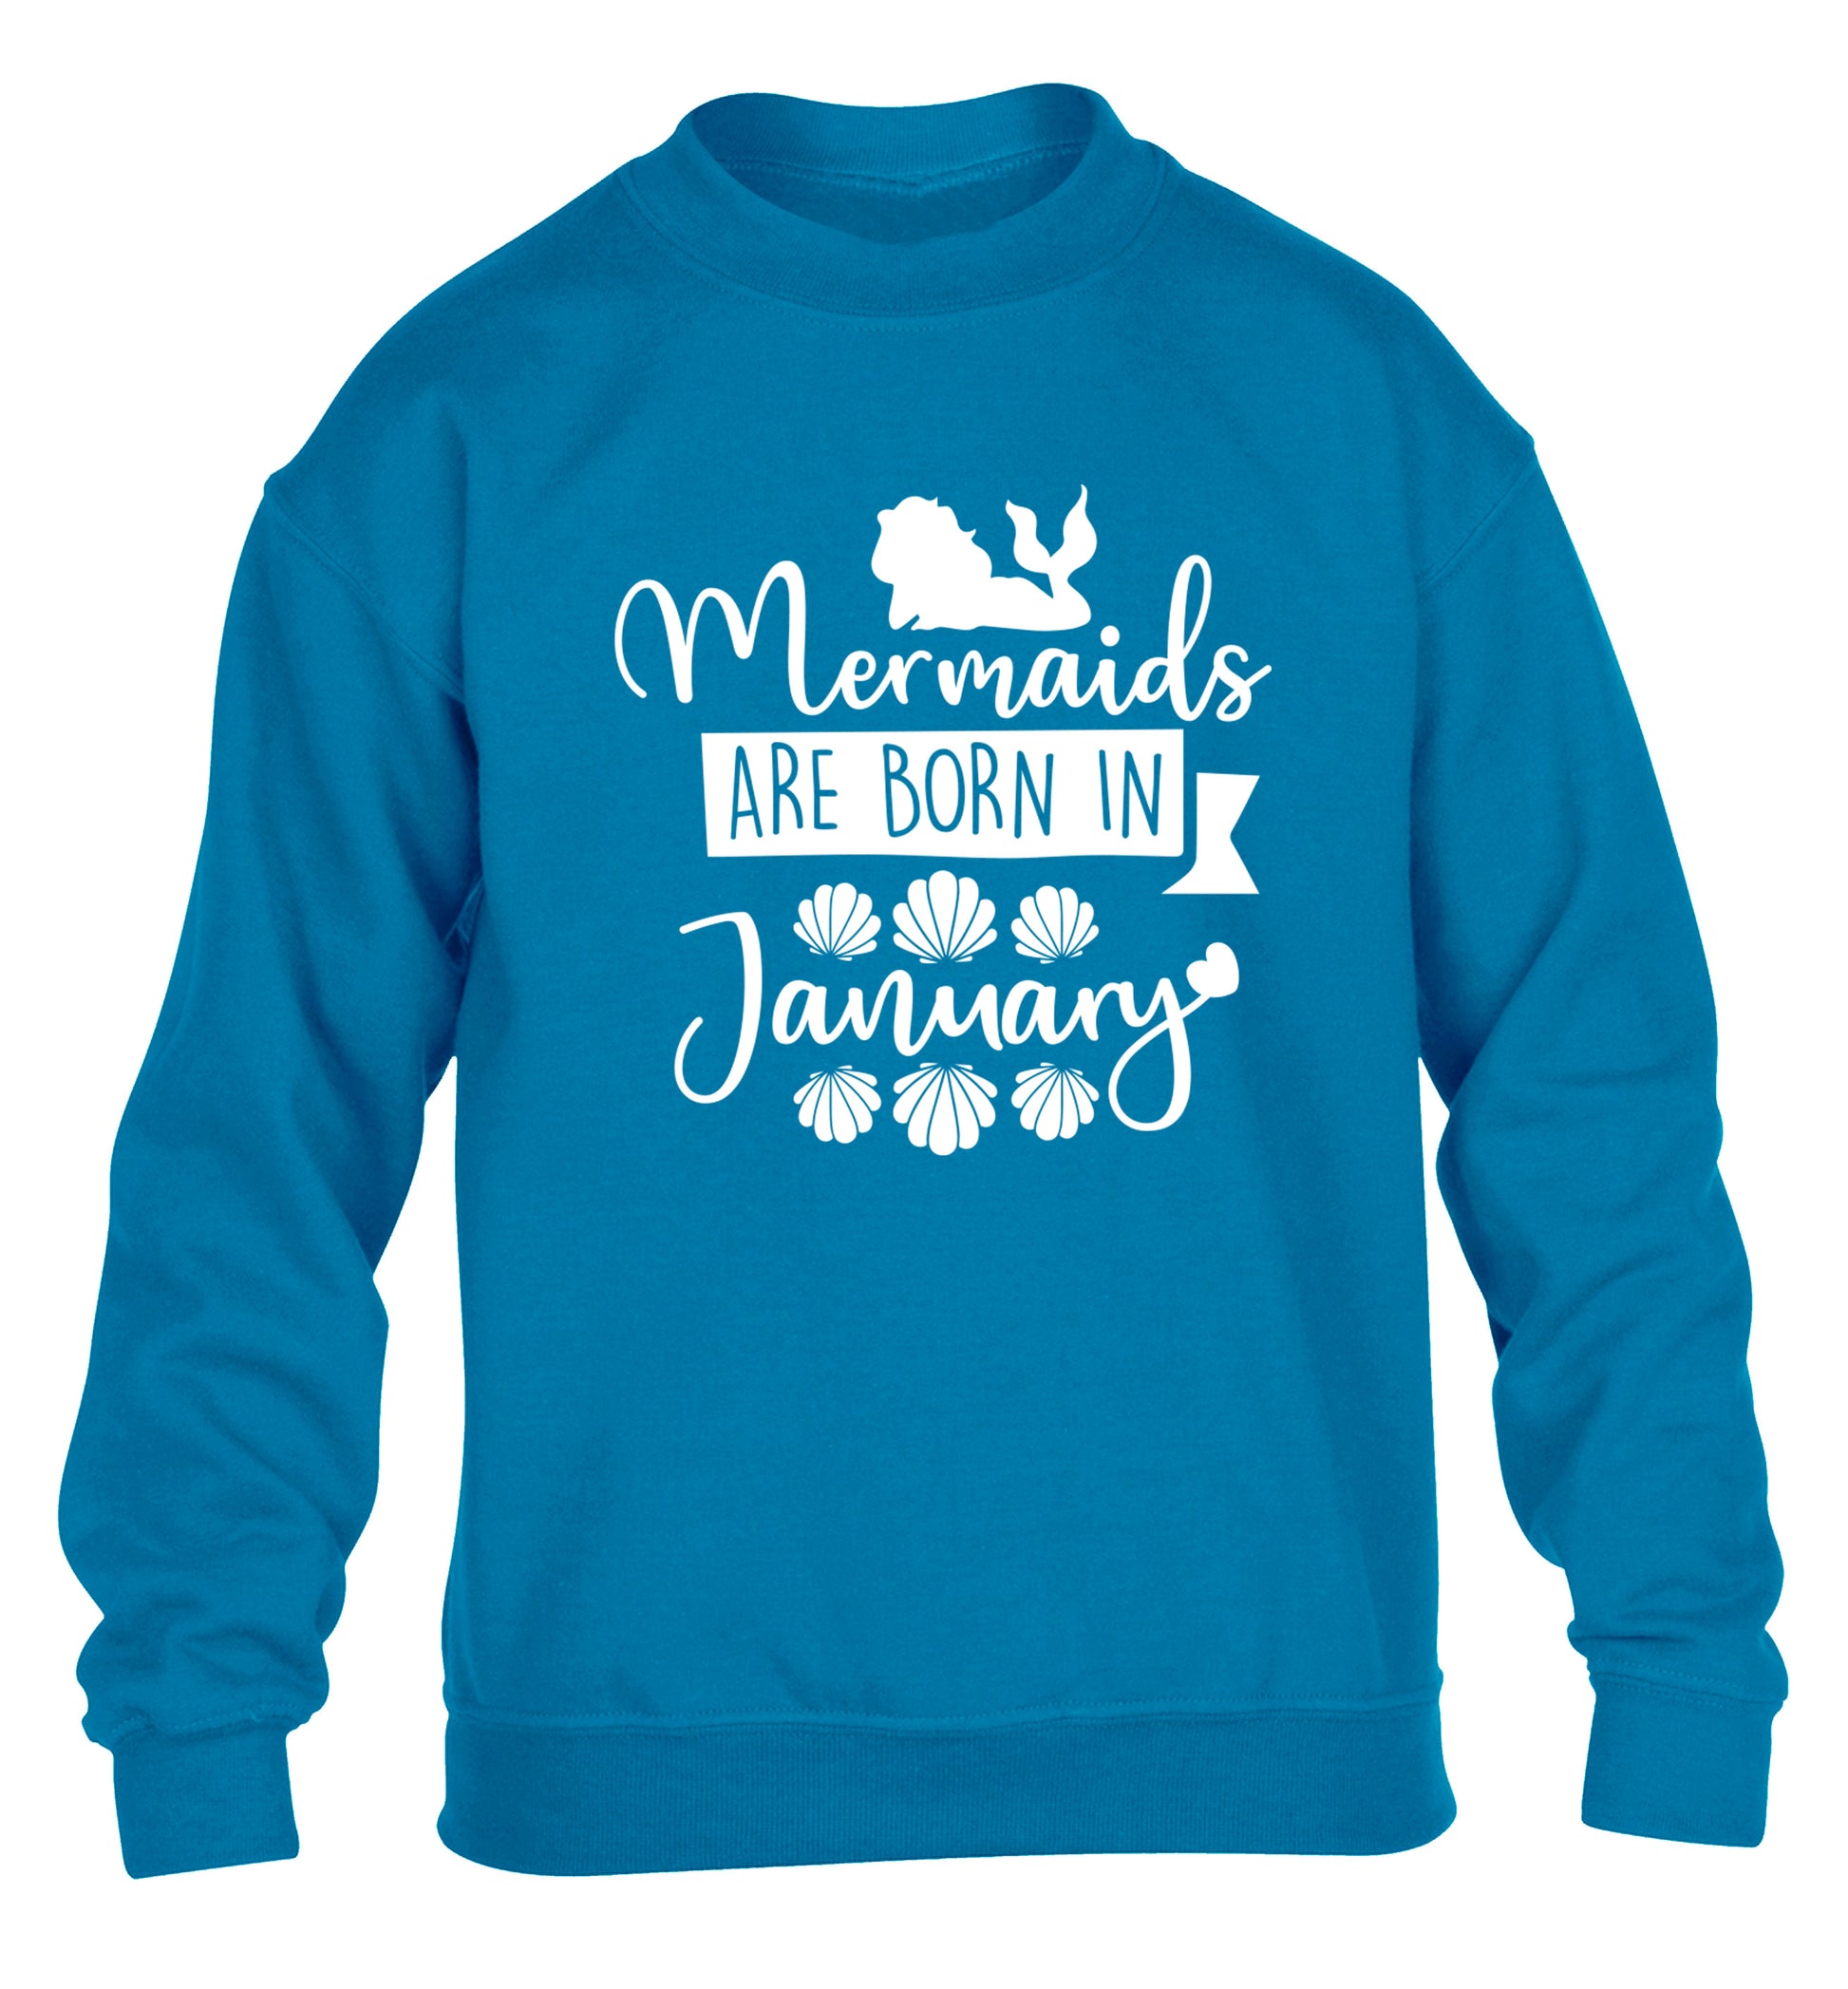 Mermaids are born in January children's blue sweater 12-13 Years